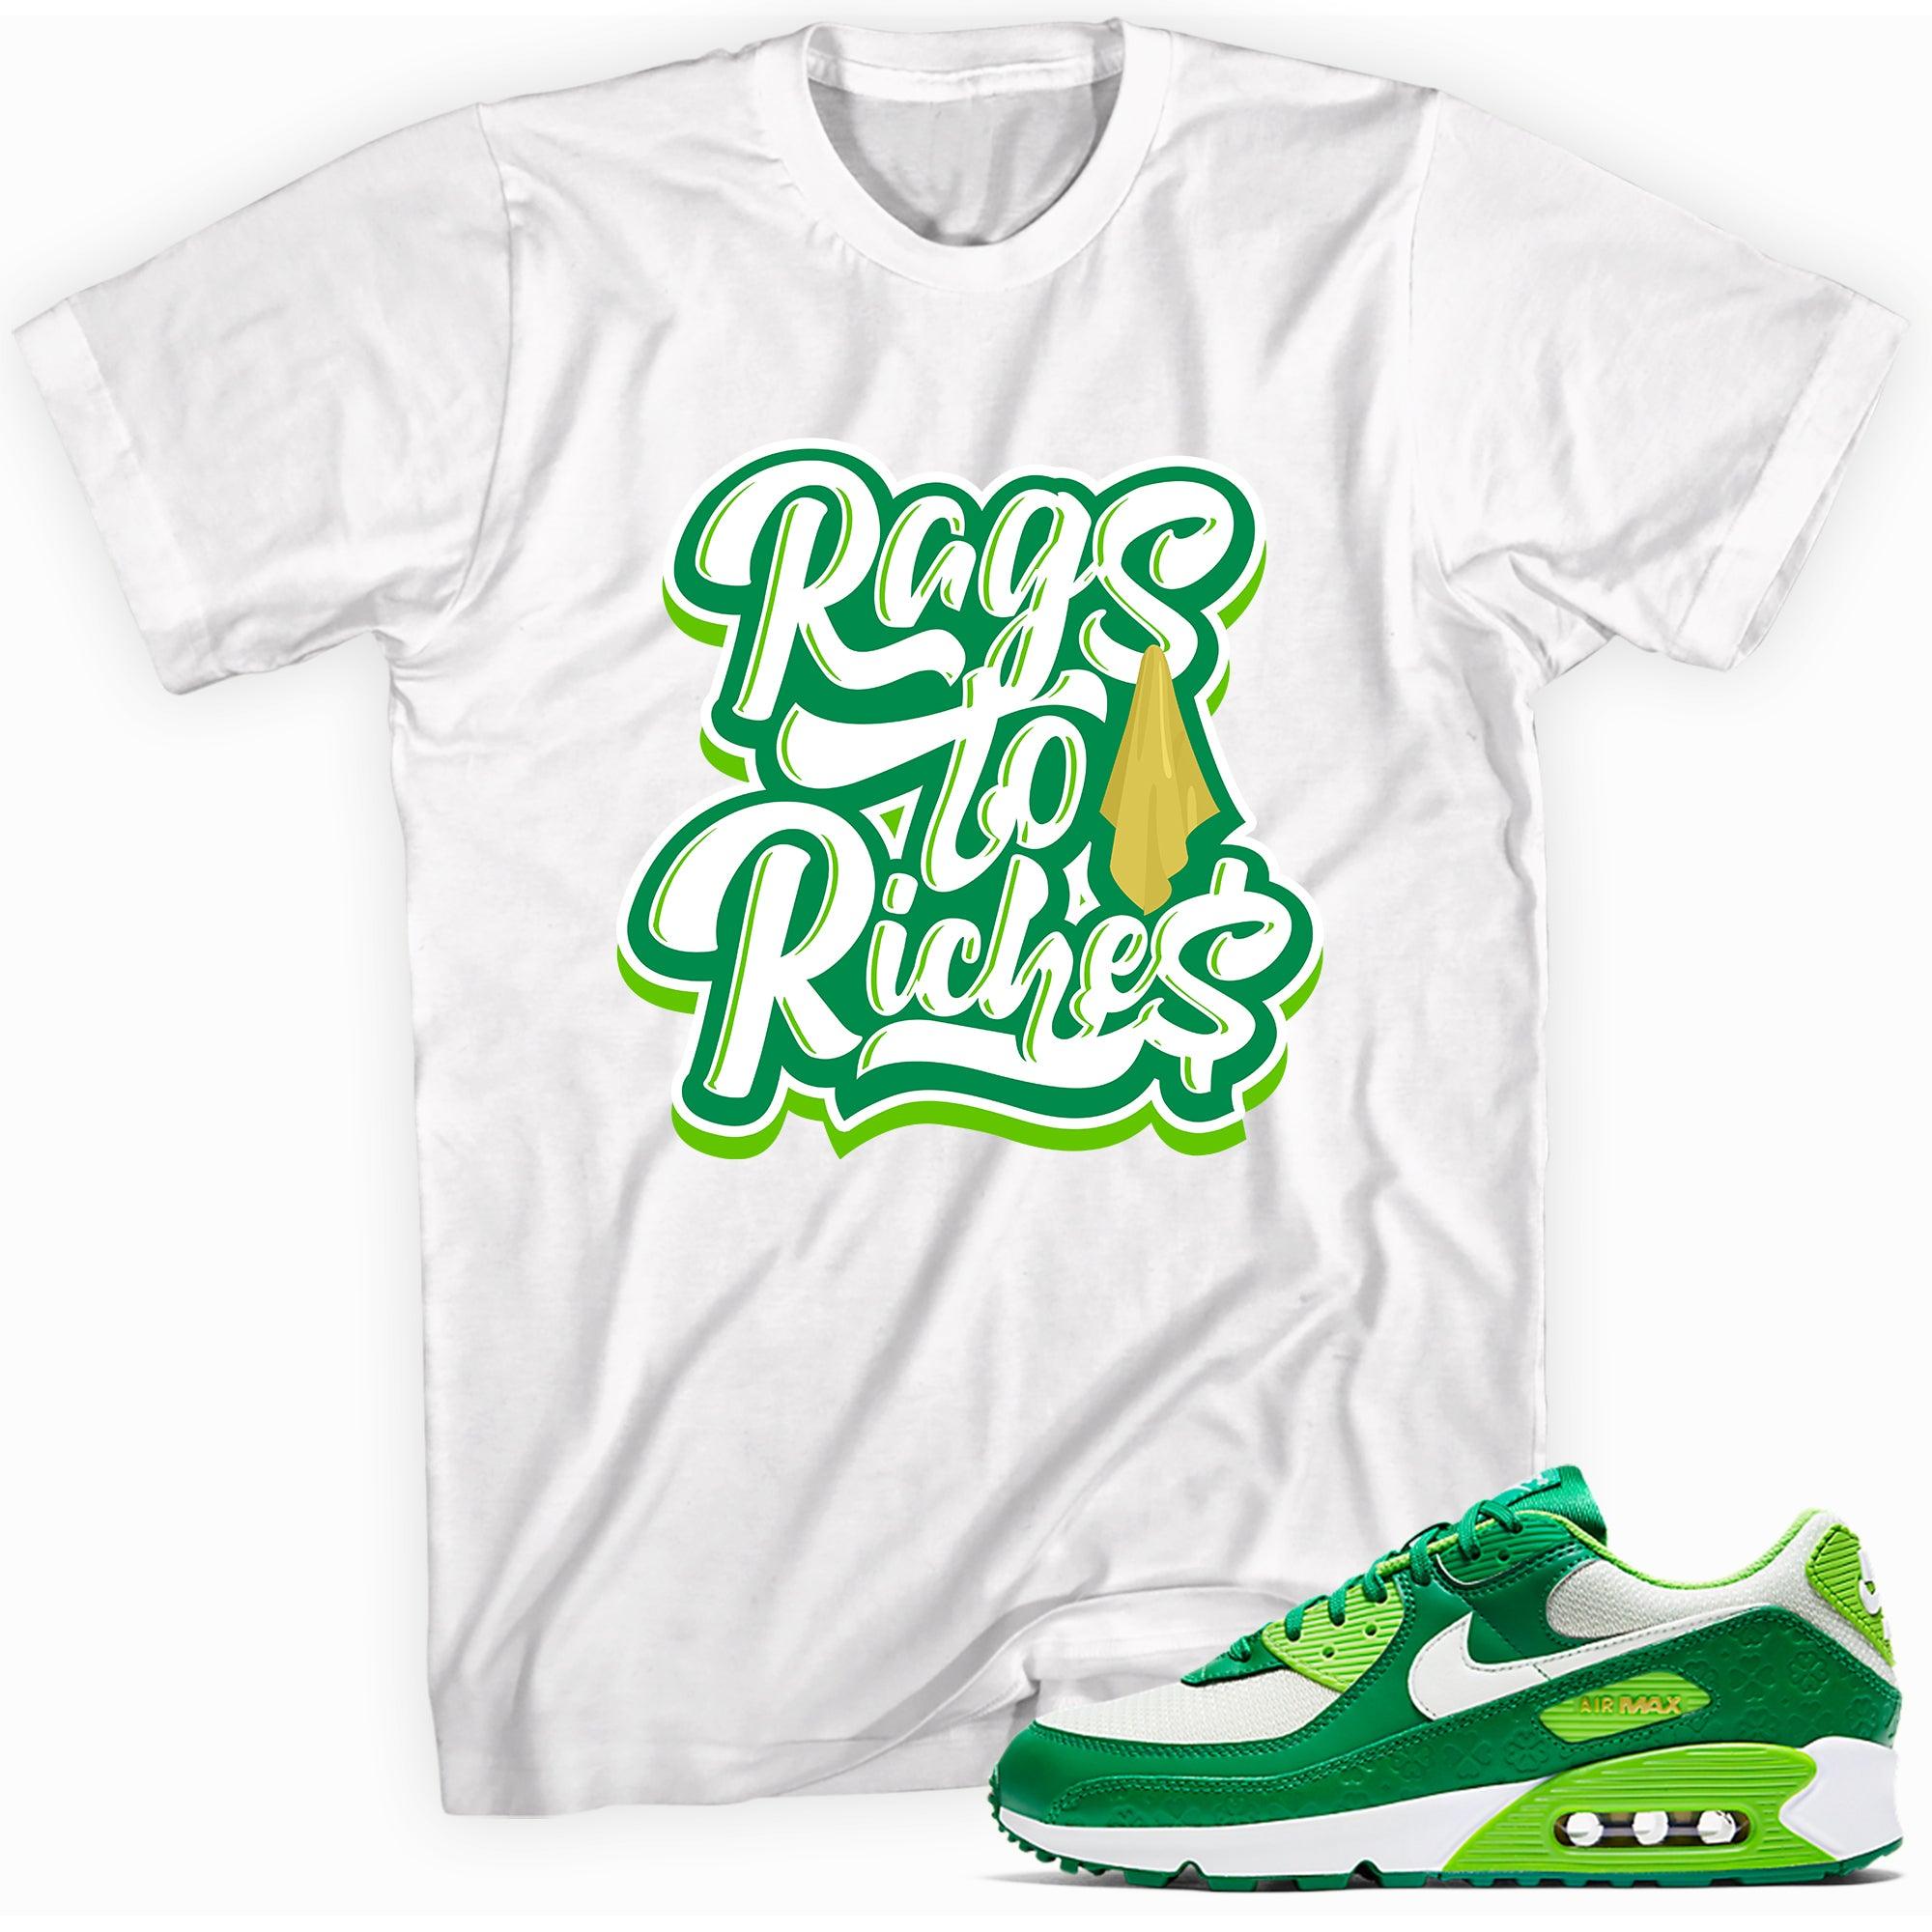 Rags To Riches Shirt Nike Air Max 90 St Patricks Day 2021 photo